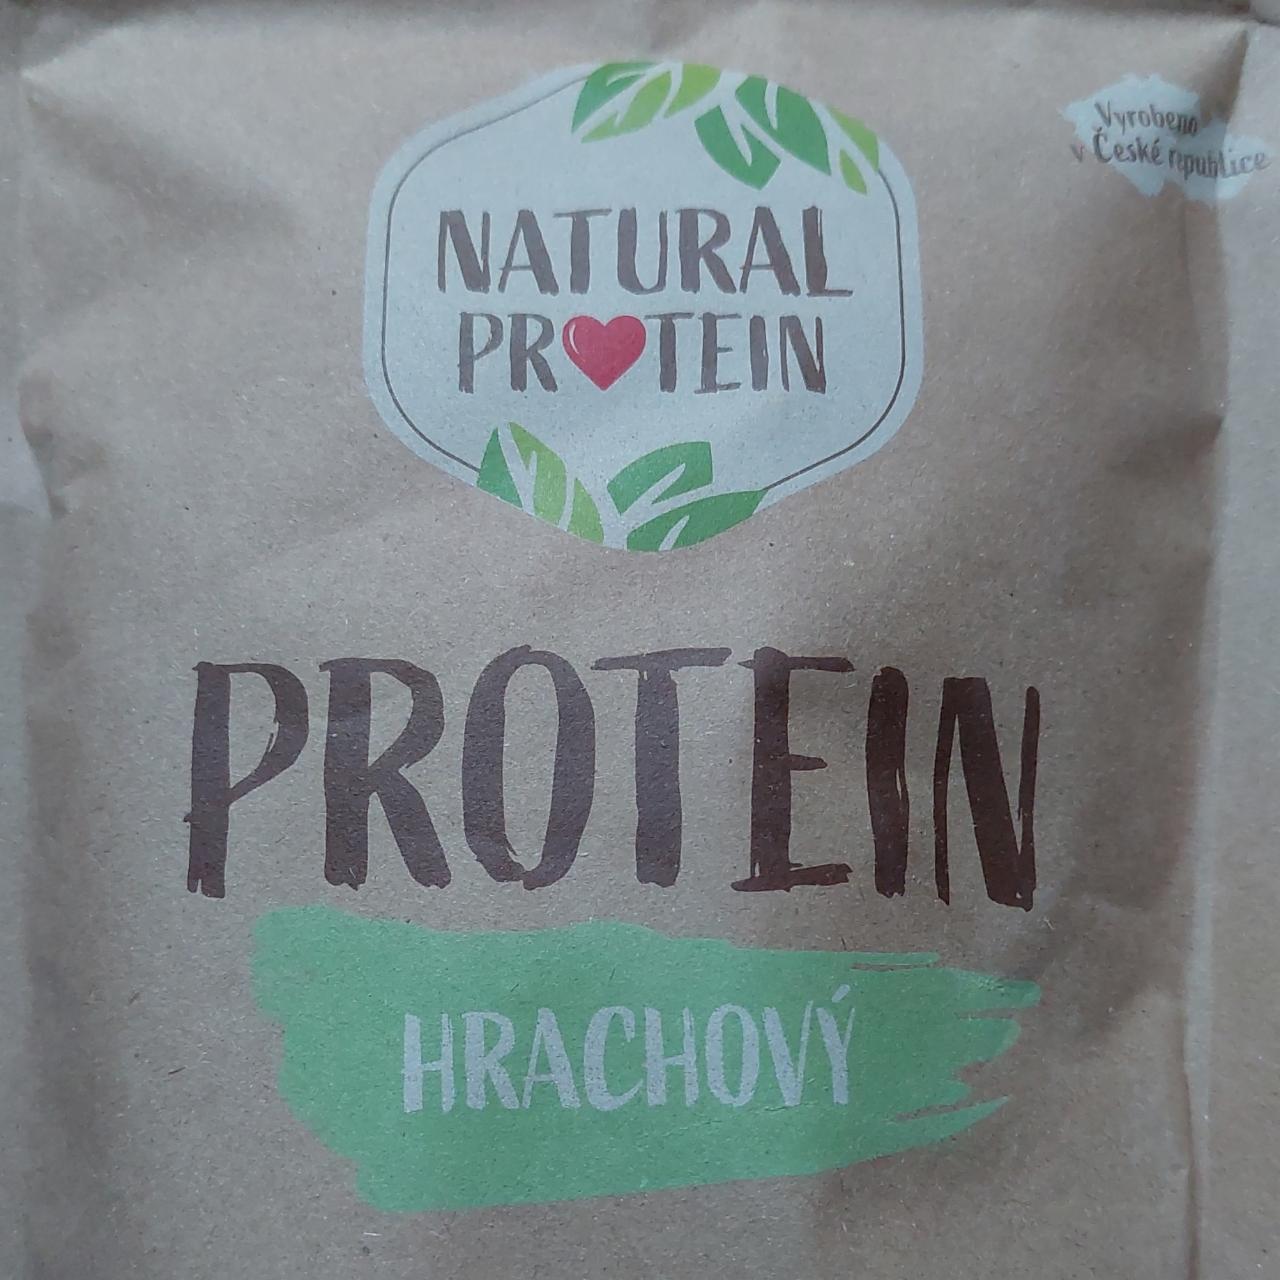 Fotografie - Protein hrachový Natural Protein